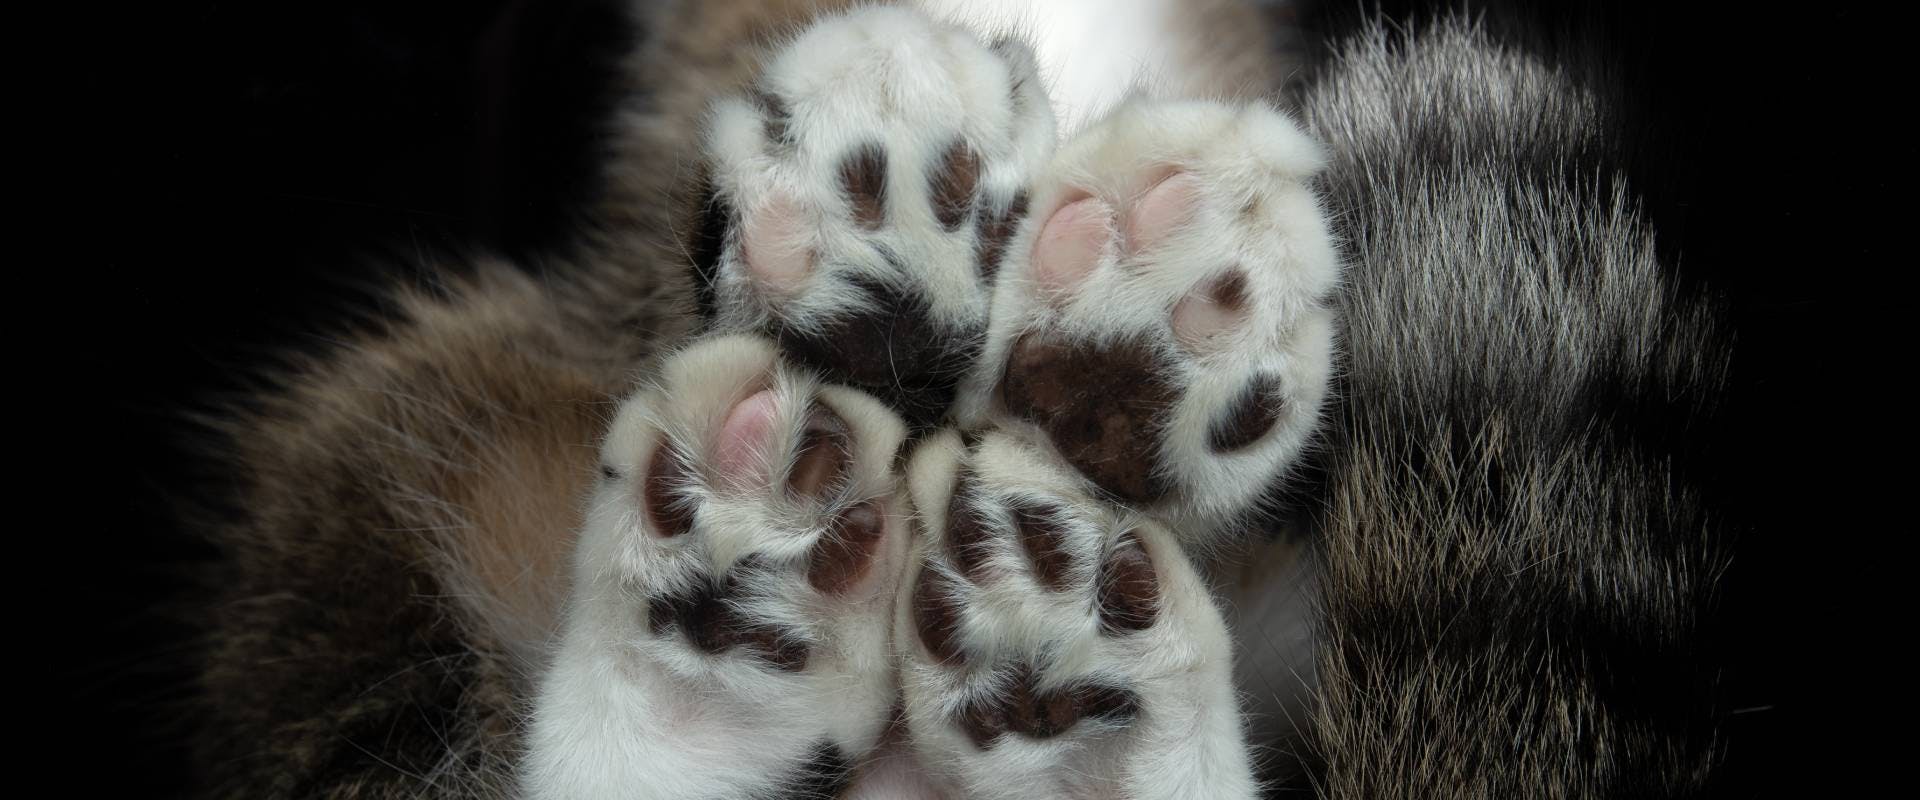 Cat toe beans.